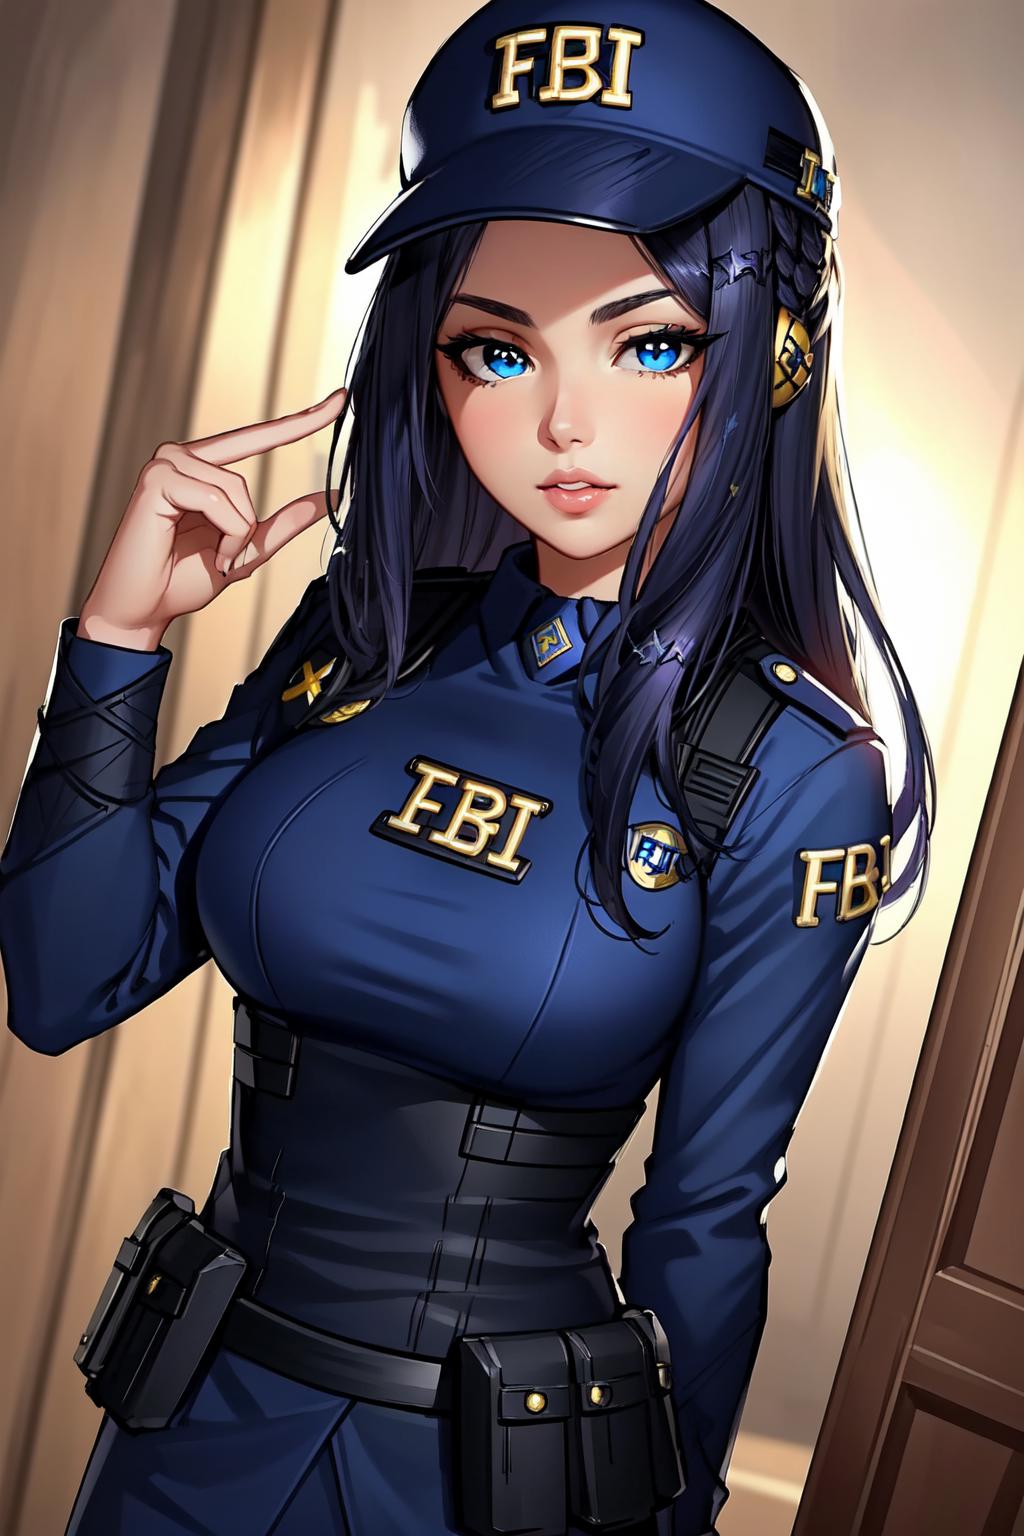 FBI gal pals by CreeperkaYt on DeviantArt